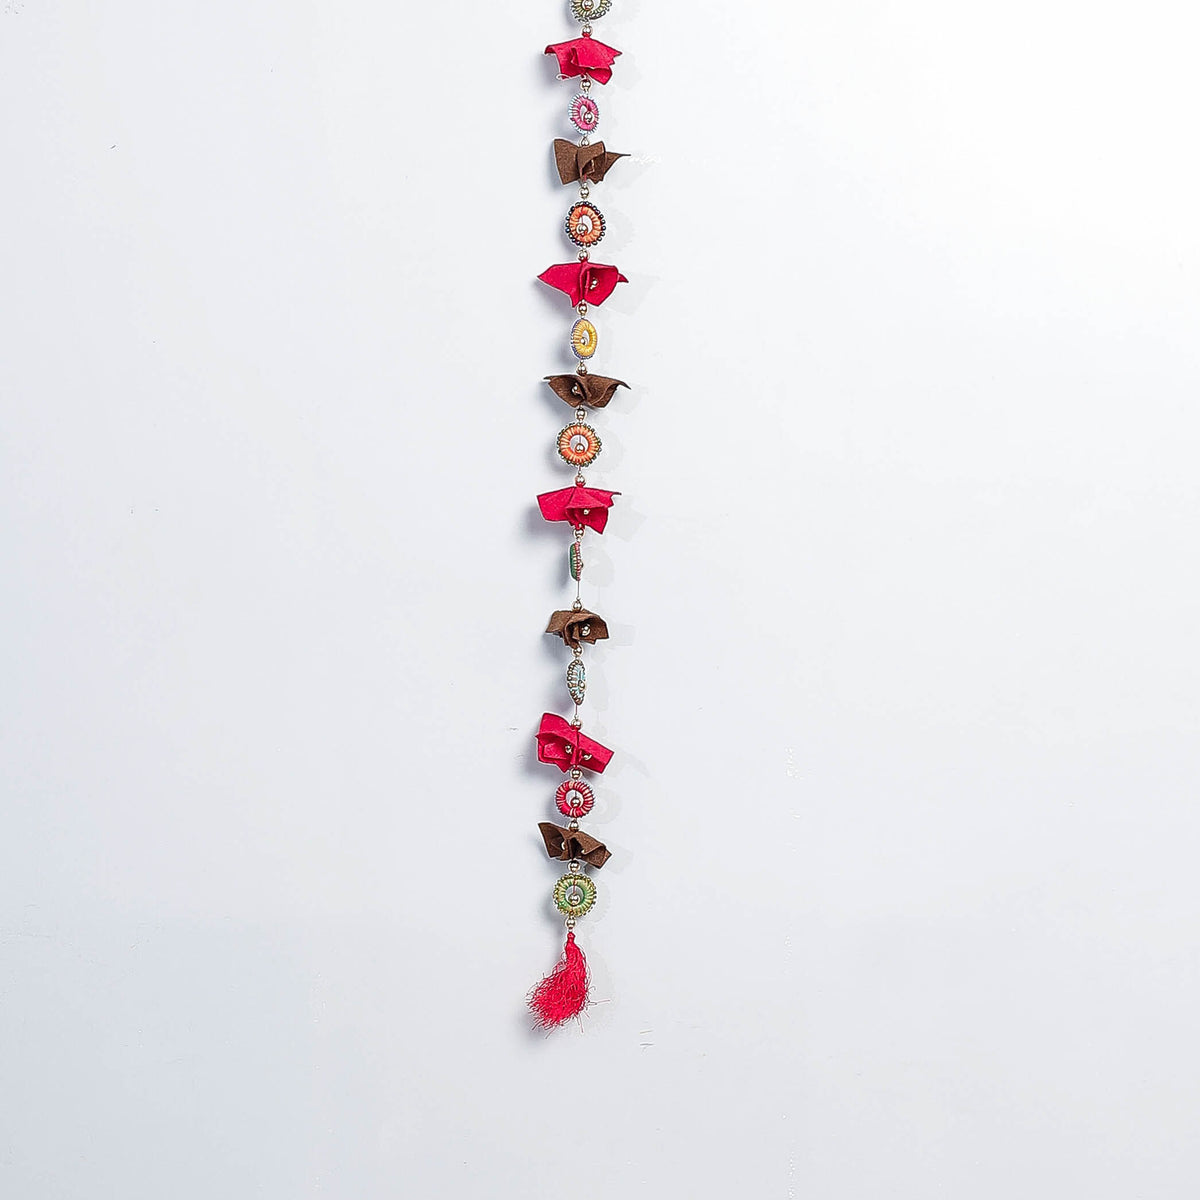 Flower - Handmade Felt &amp; Beadwork Wall Hanging